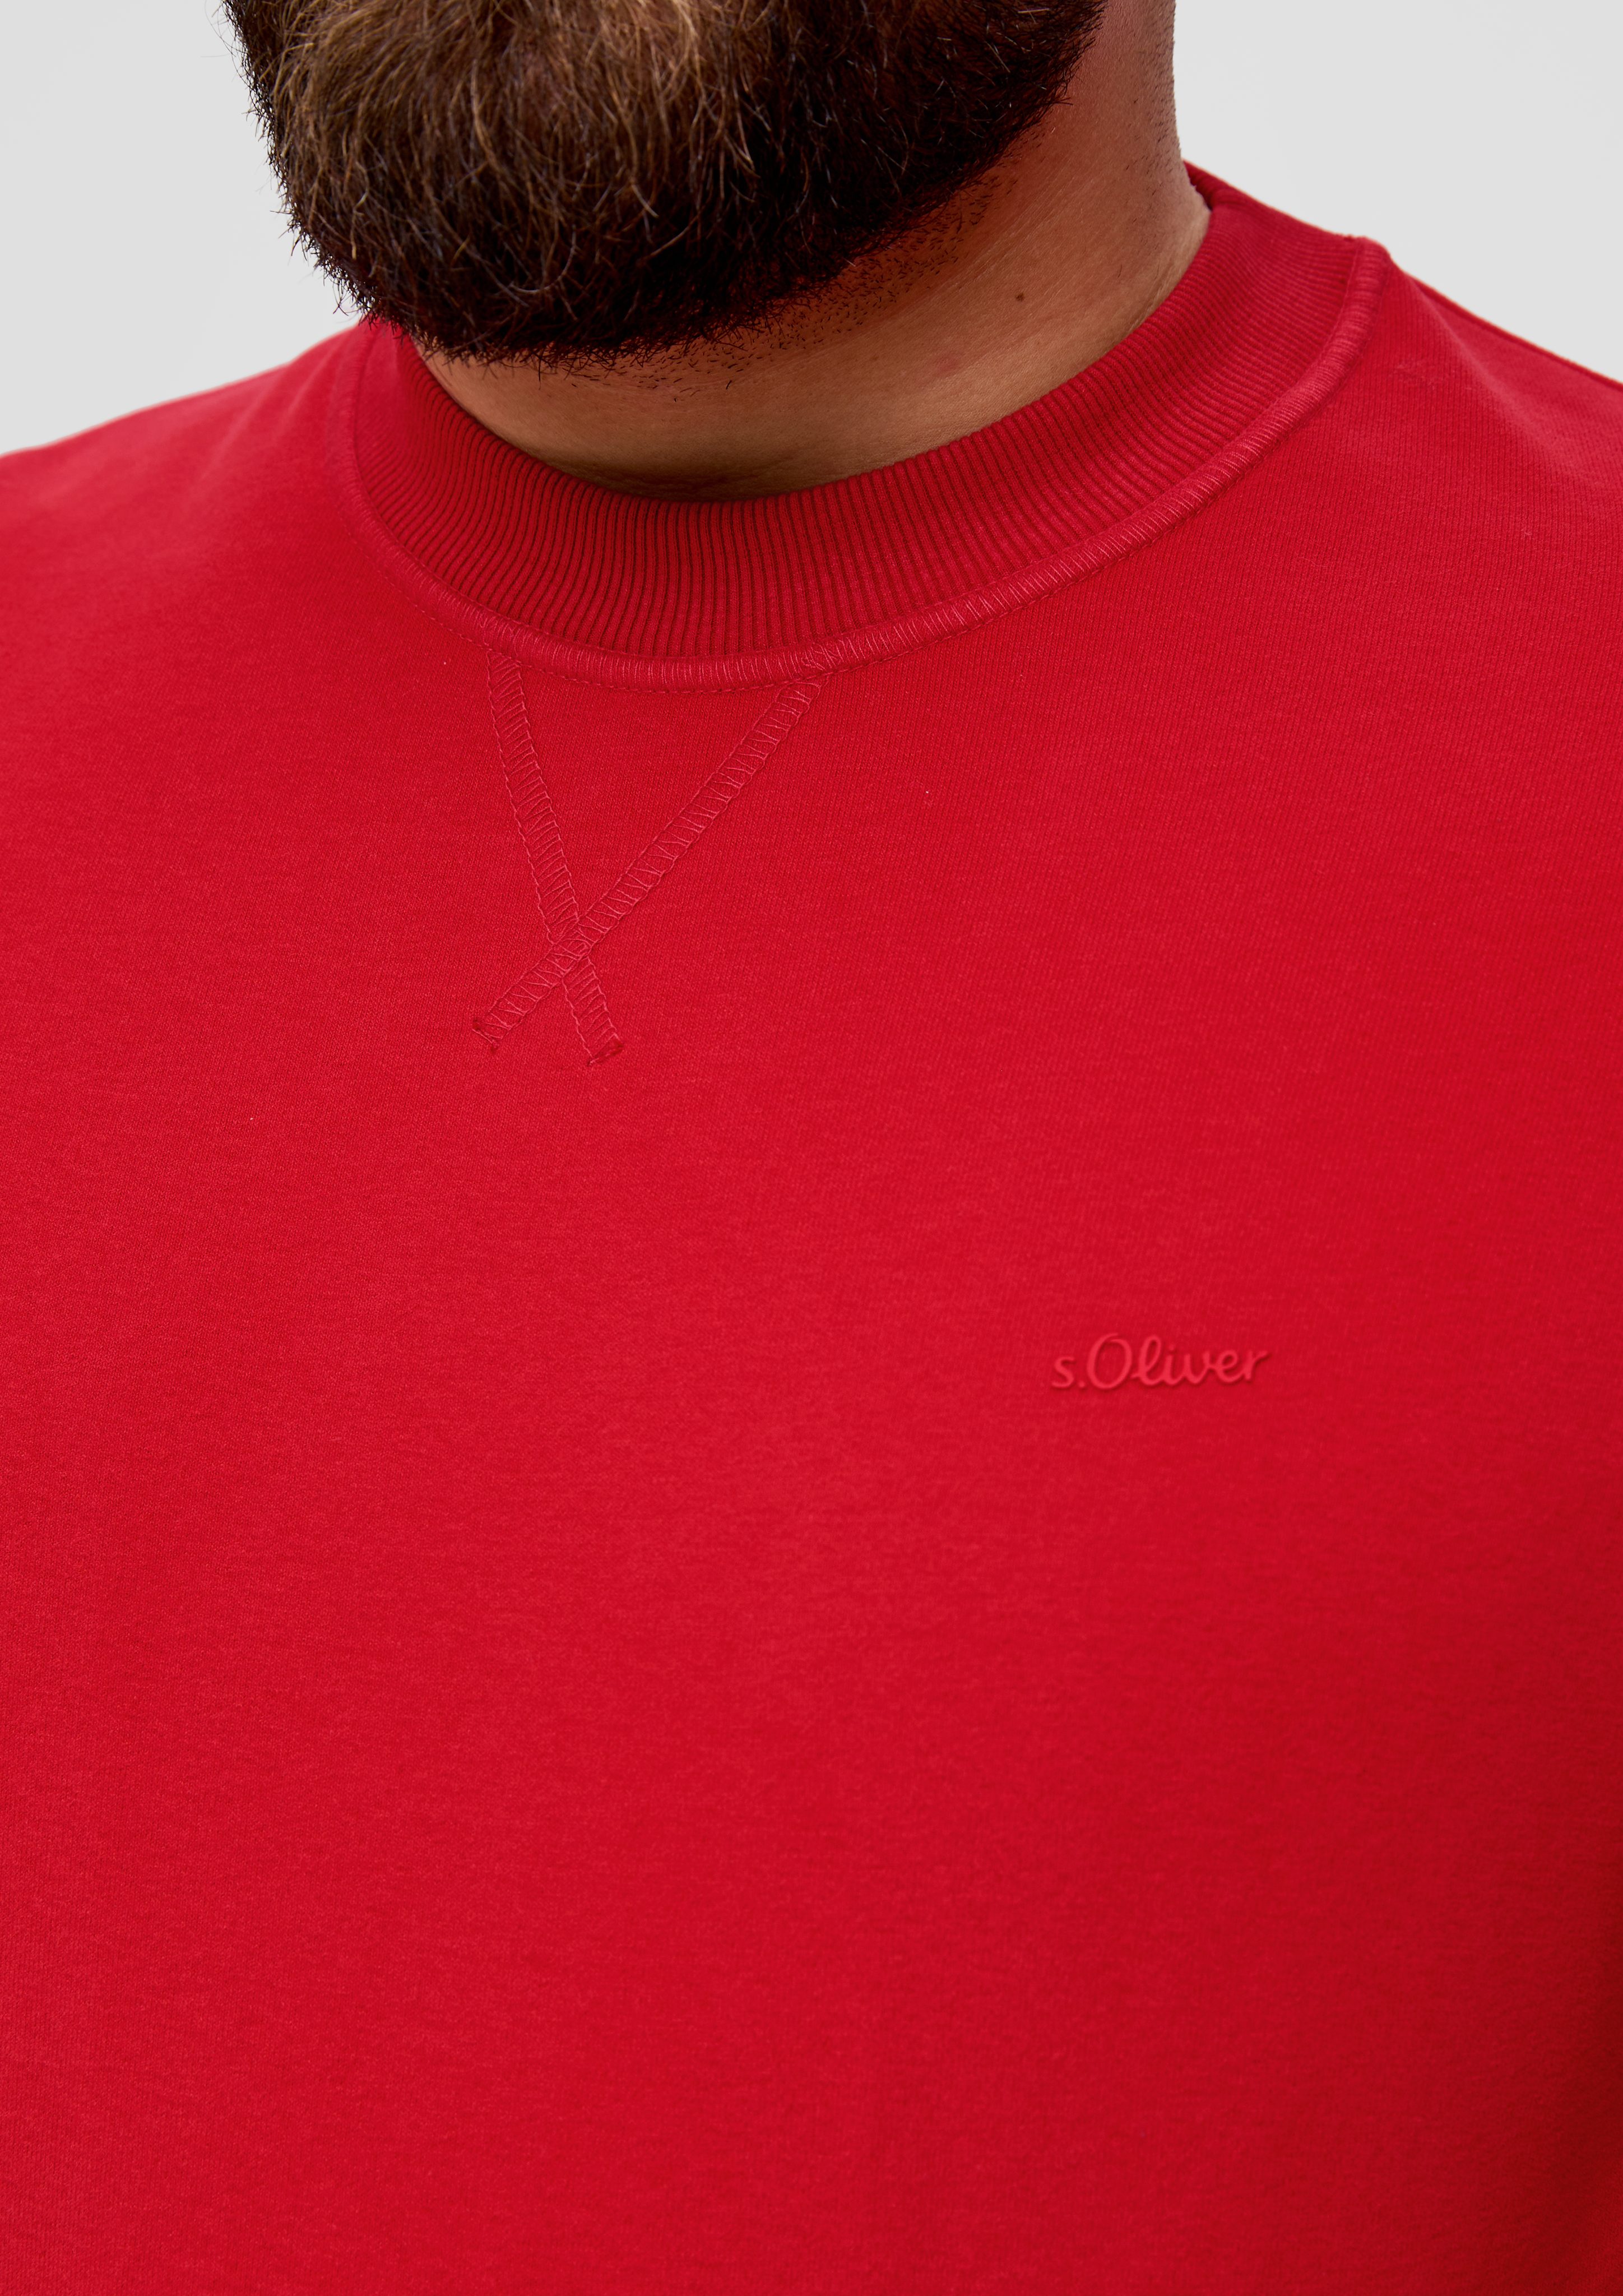 mit Sweatshirt s.Oliver chilirot Logo Sweatshirt Logoprint